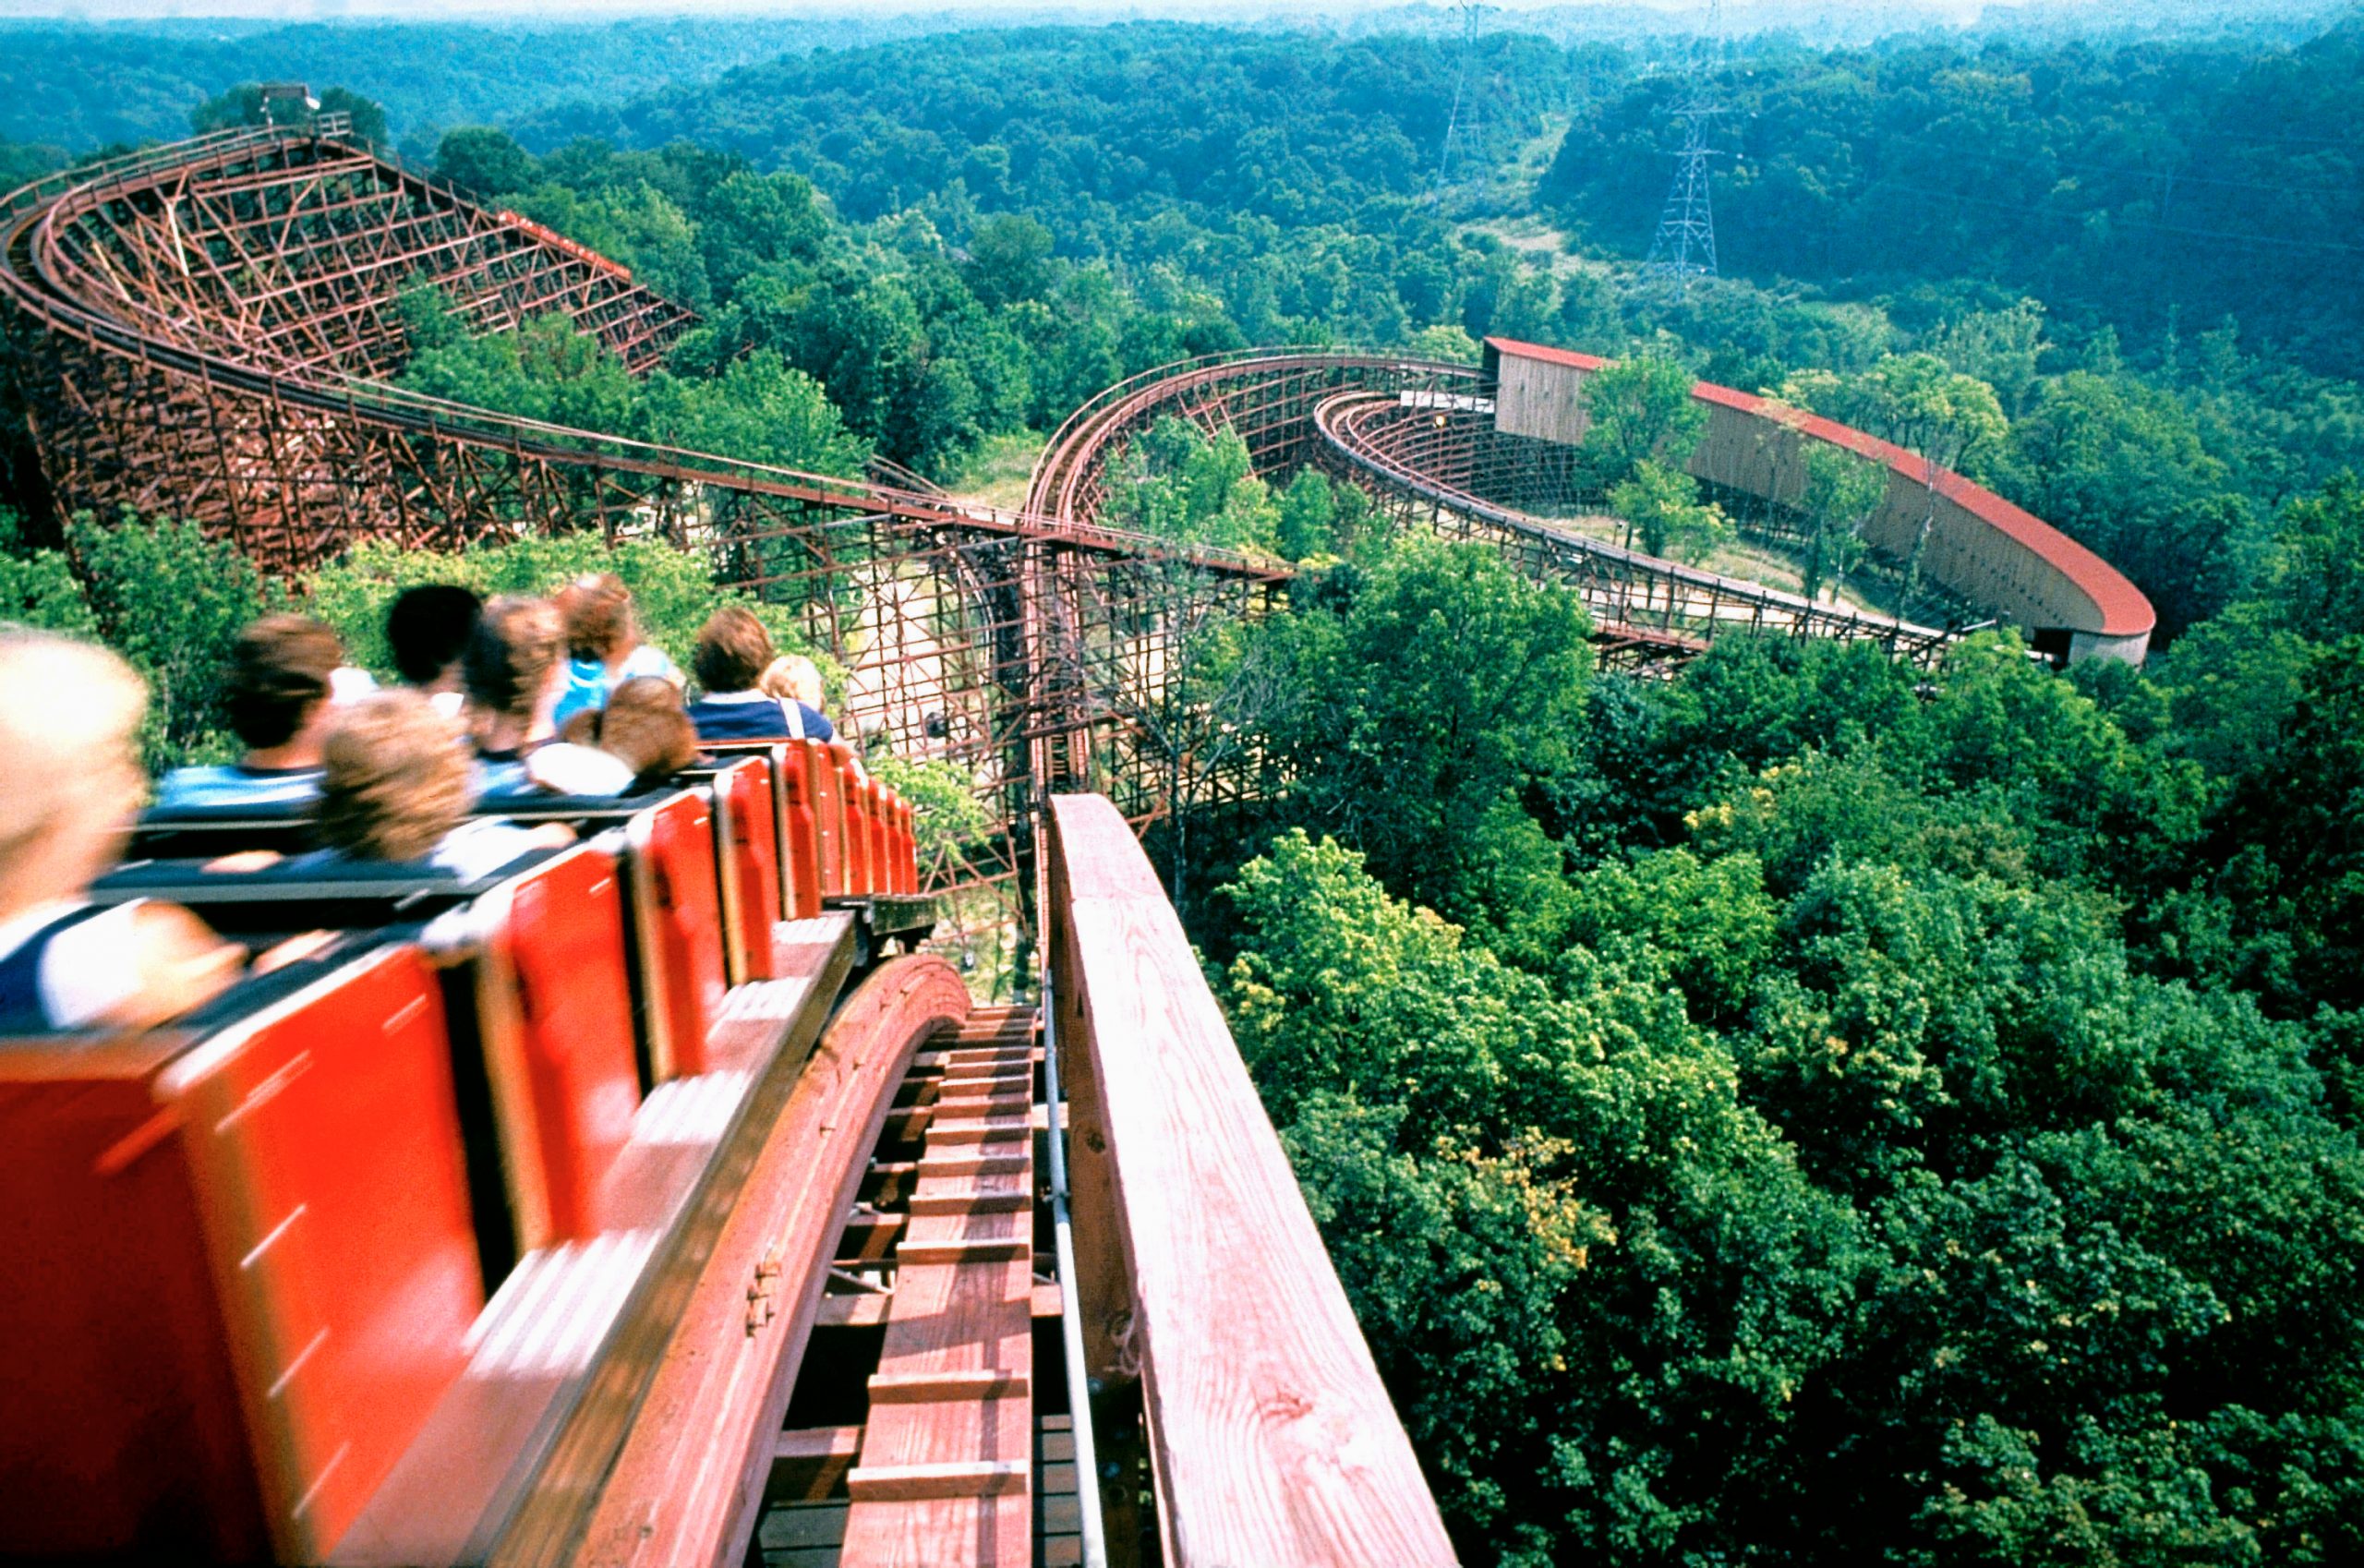 The Beast roller coaster at Kings Island is a favorite source of summer entertainment in cincinnati